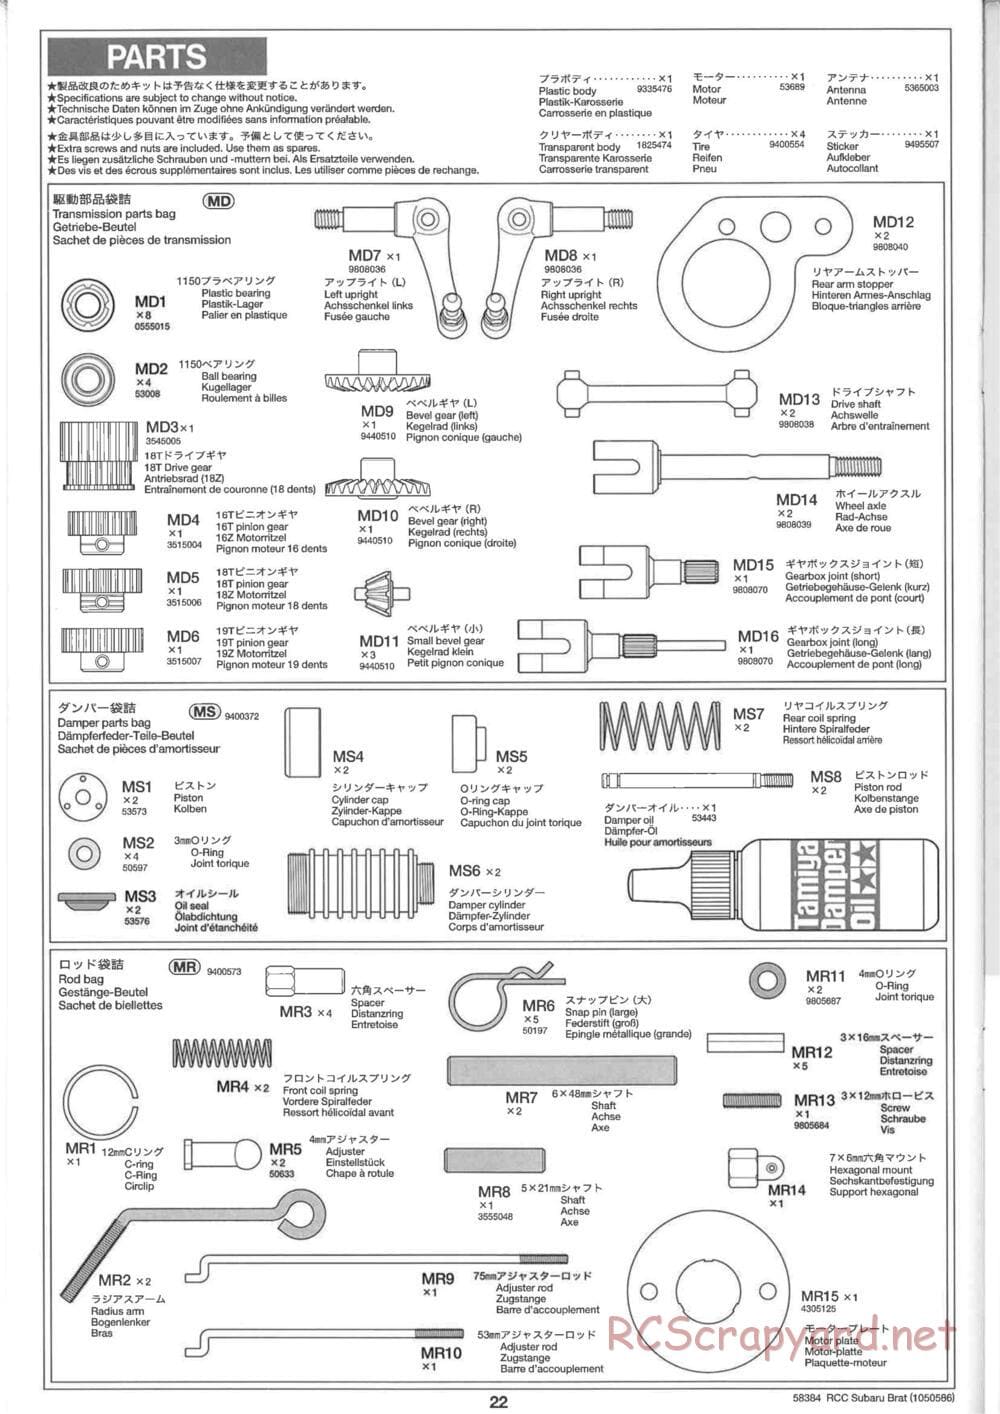 Tamiya - Subaru Brat 2007 - ORV Chassis - Manual - Page 22